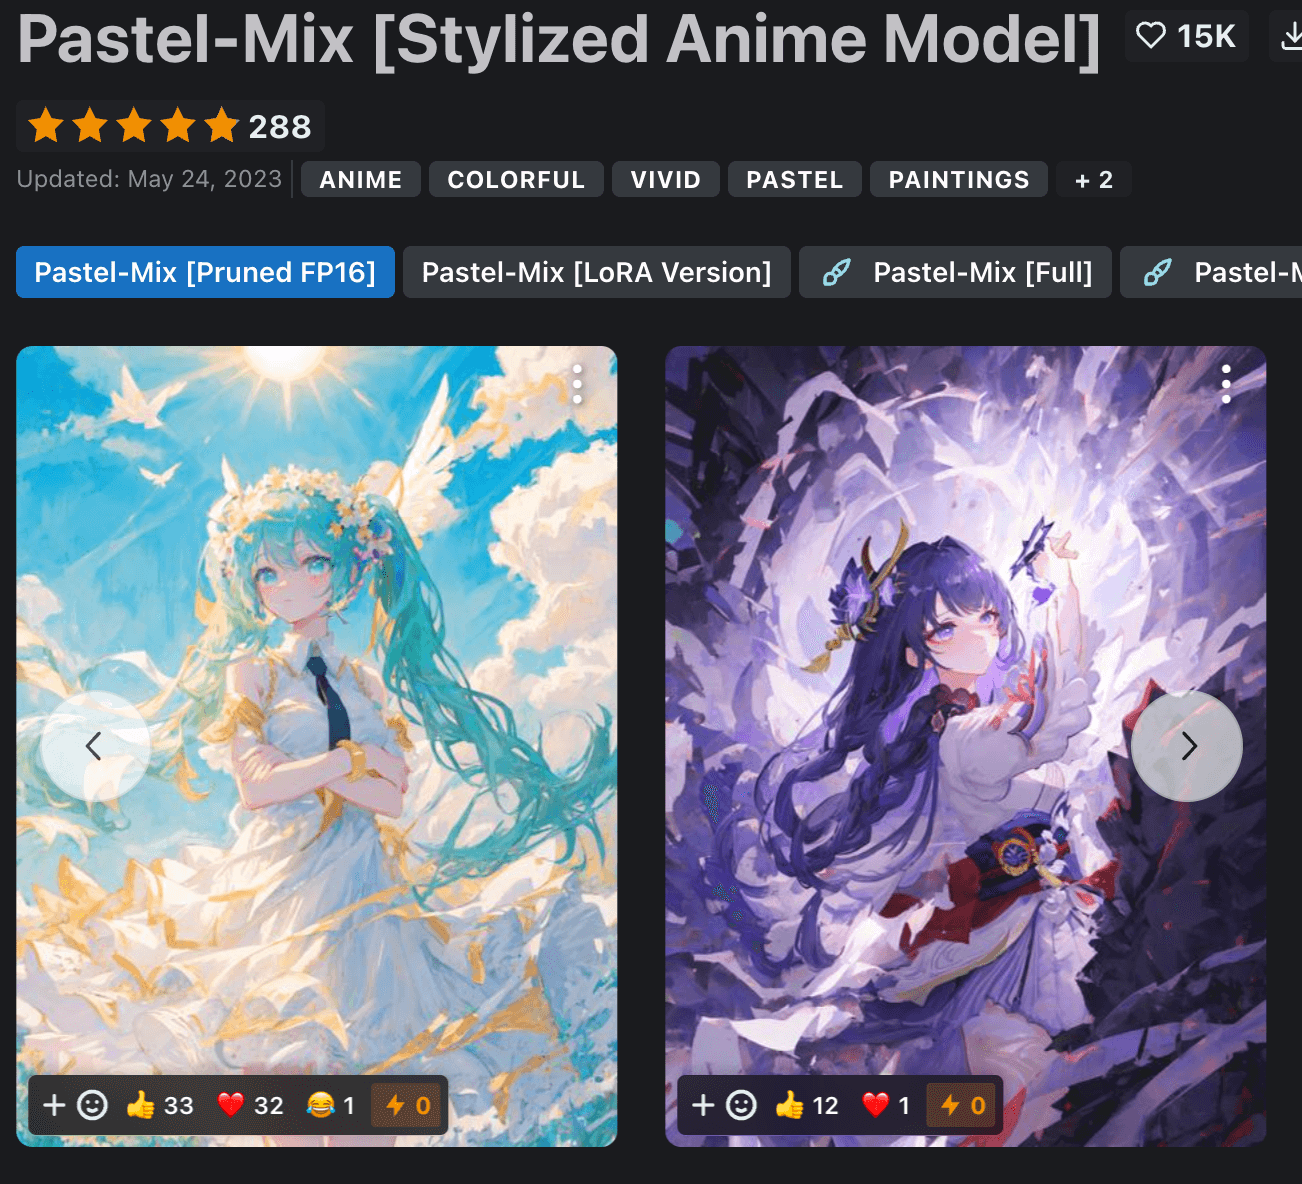 Pastel Mix Stylized Anime